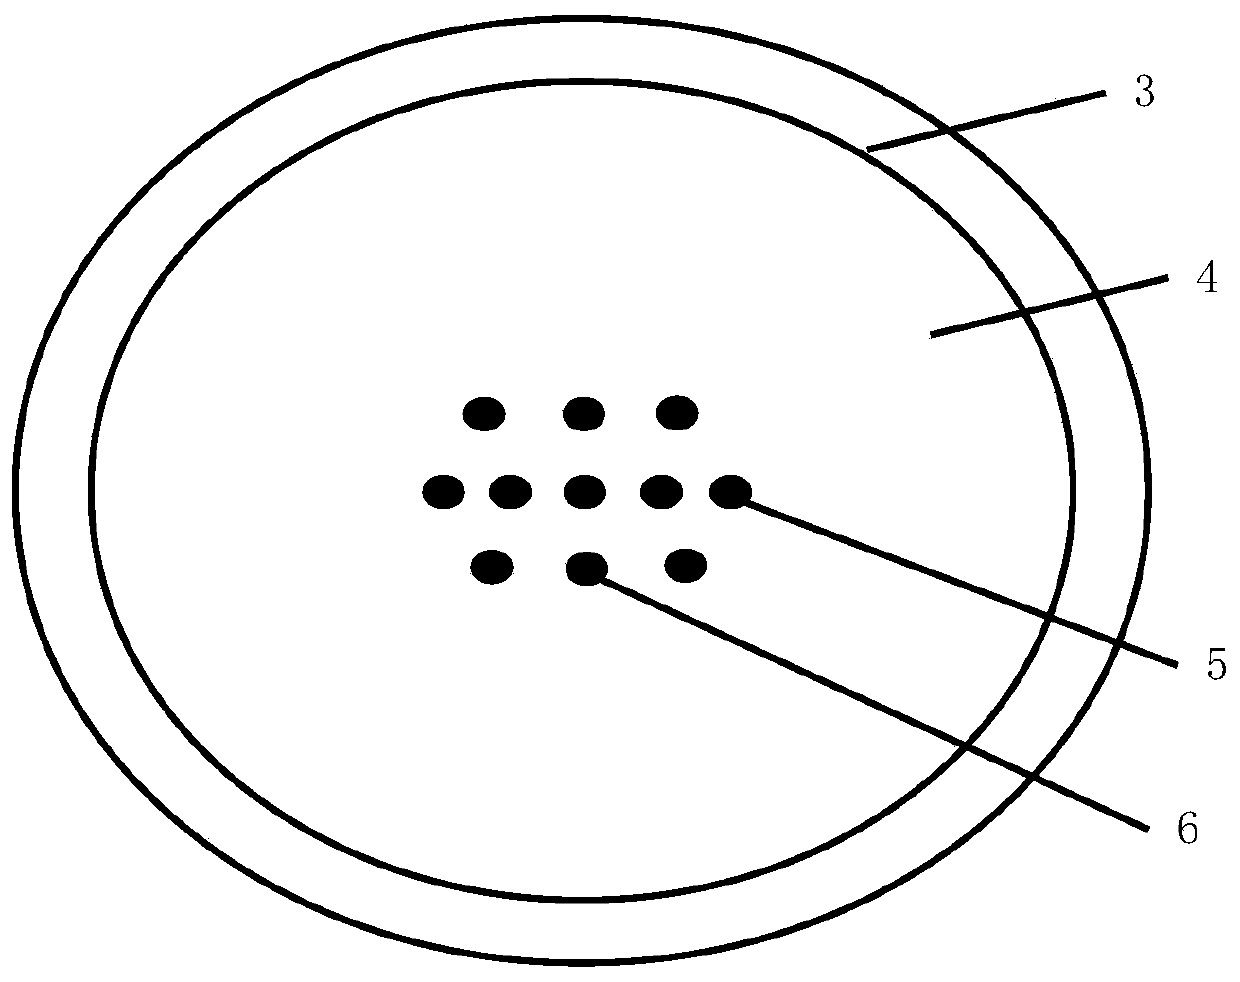 Hemispherical lens feed transceiver integrated double ellipsoidal lens antenna